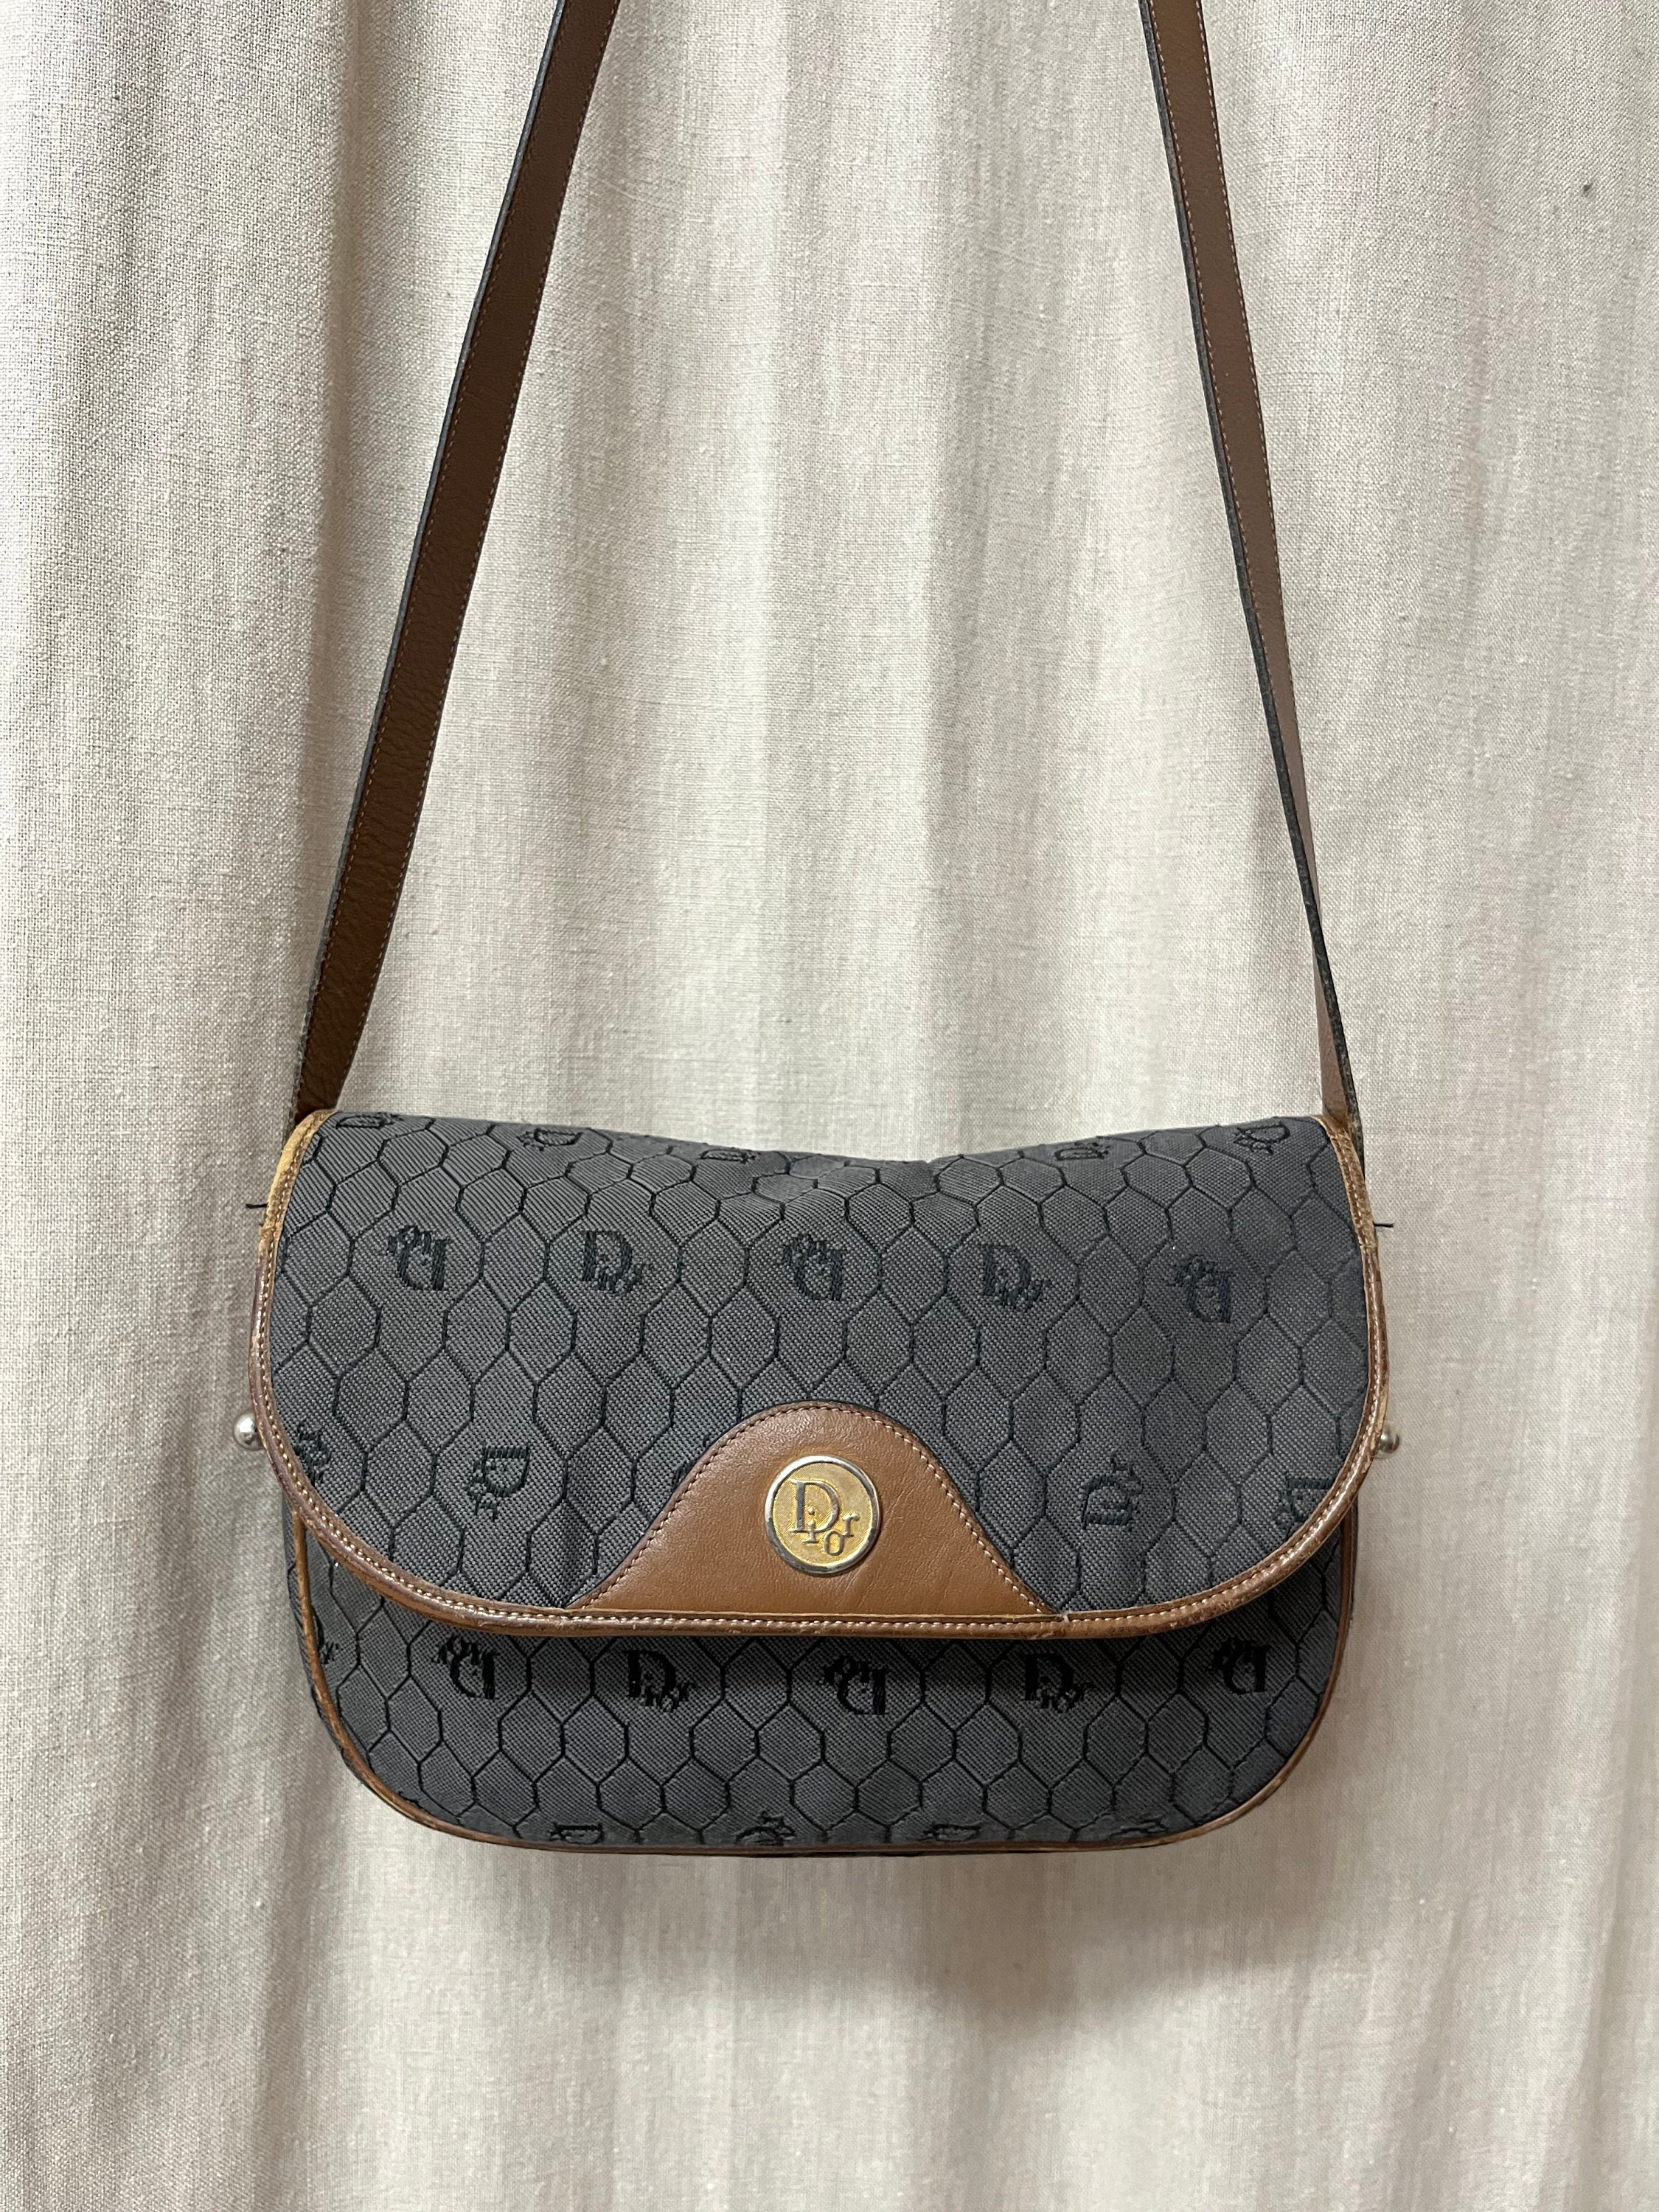 FOAK Christian Dior honeycomb pattern shell bag - Shop foakvintage